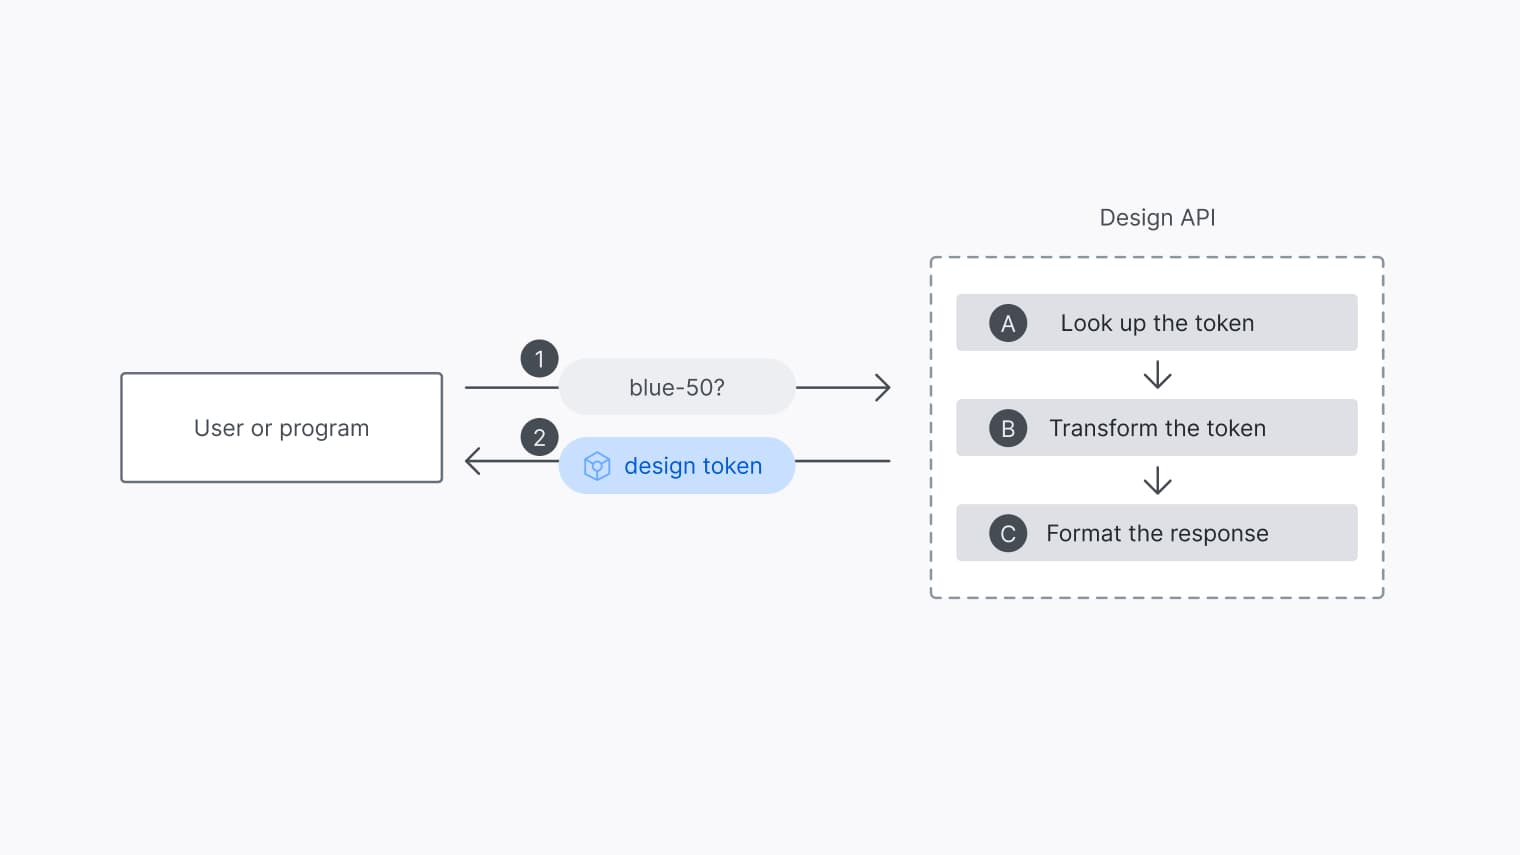 A closer look at the internal process of the design API